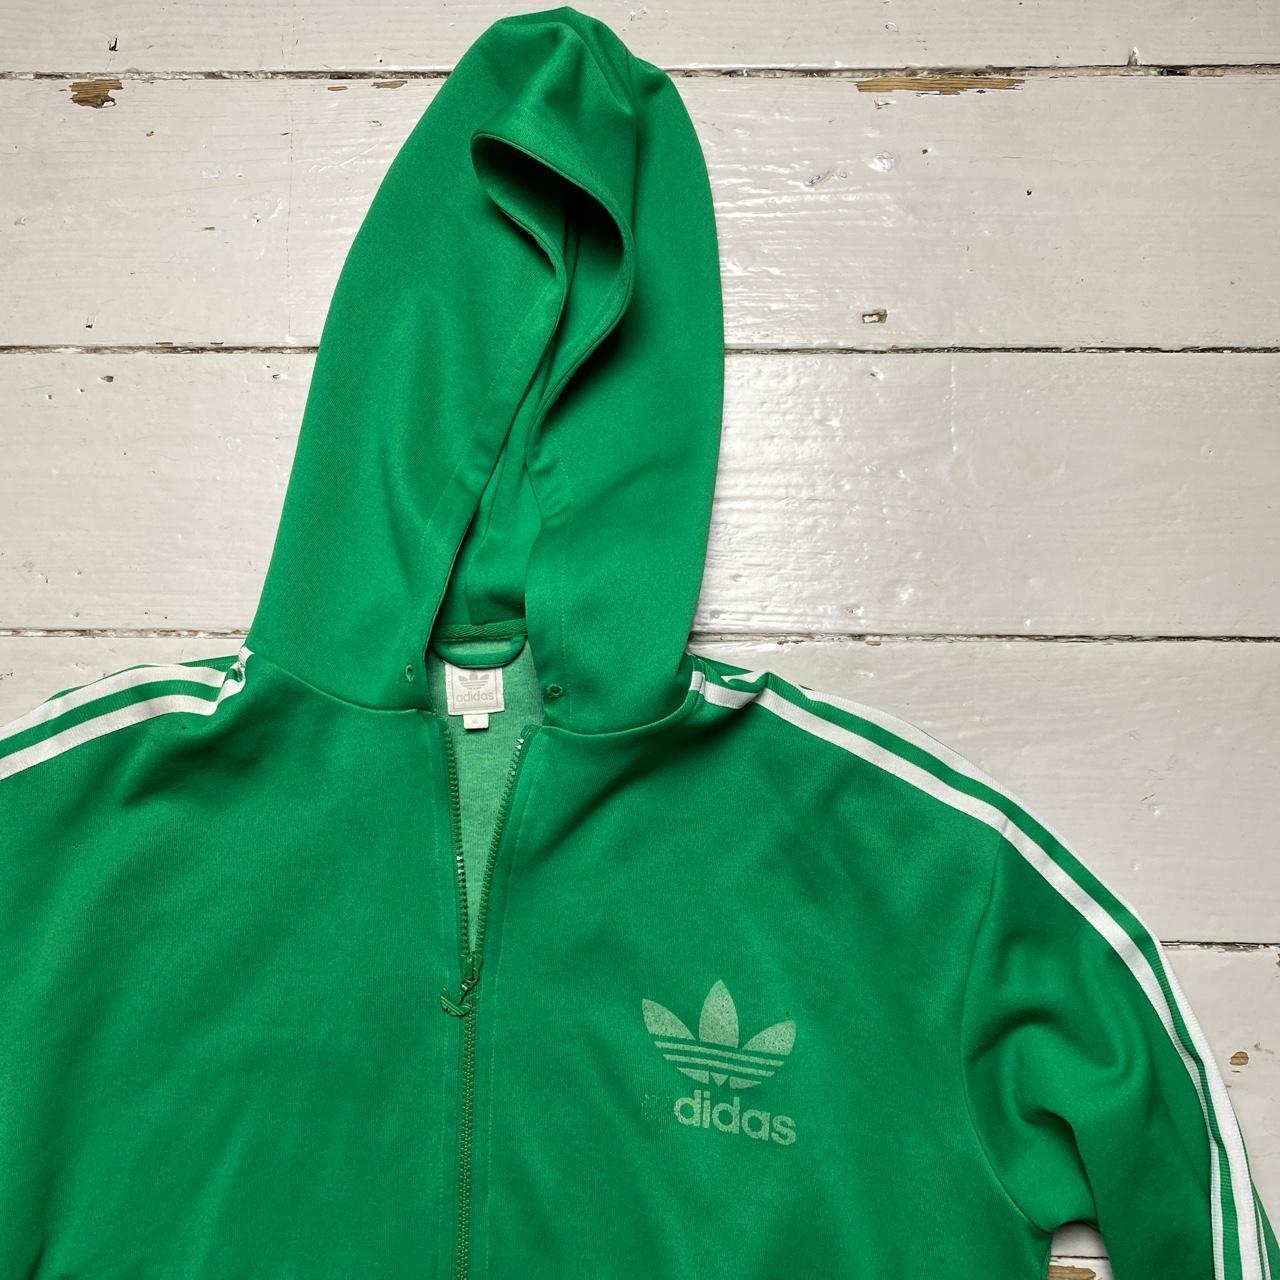 Adidas Originals Green and White Hoodie